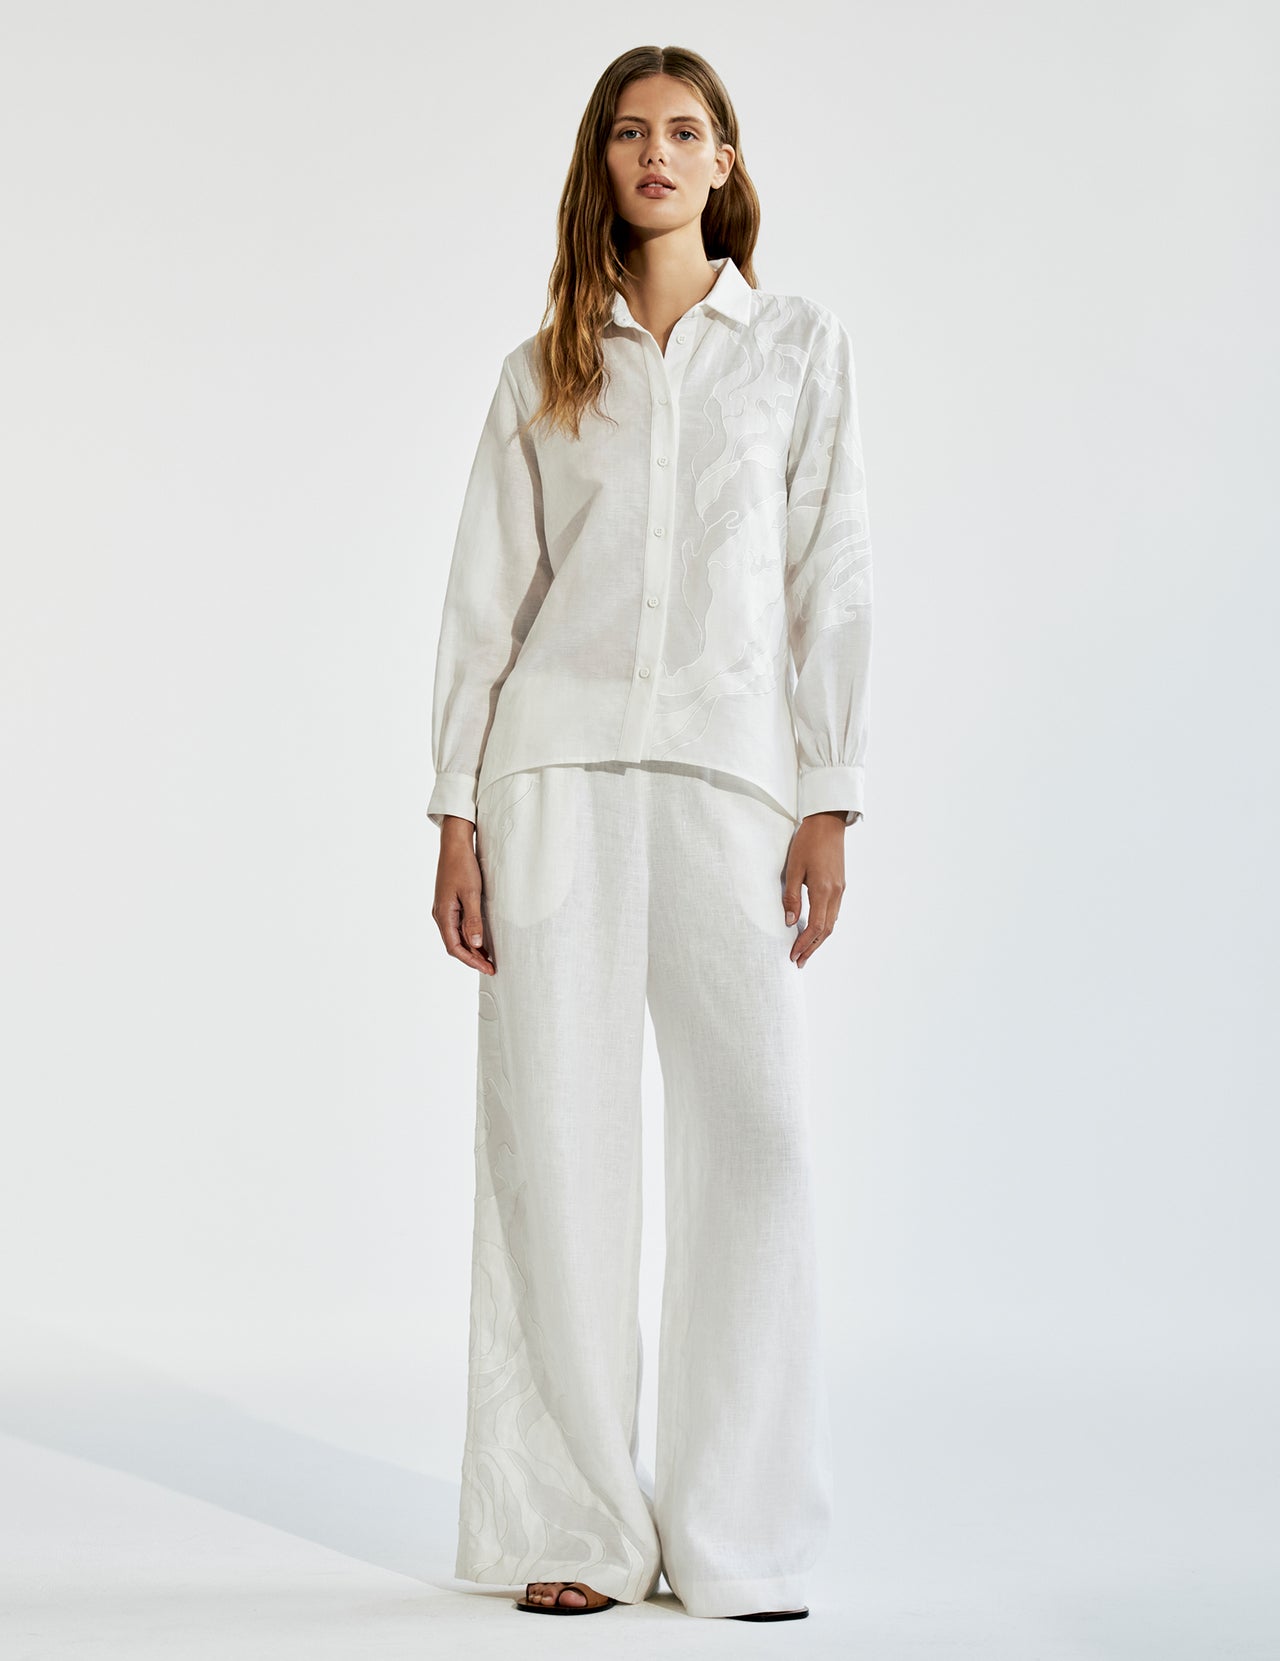  White Linen Palmer Shirt With Cutwork Appliqué  